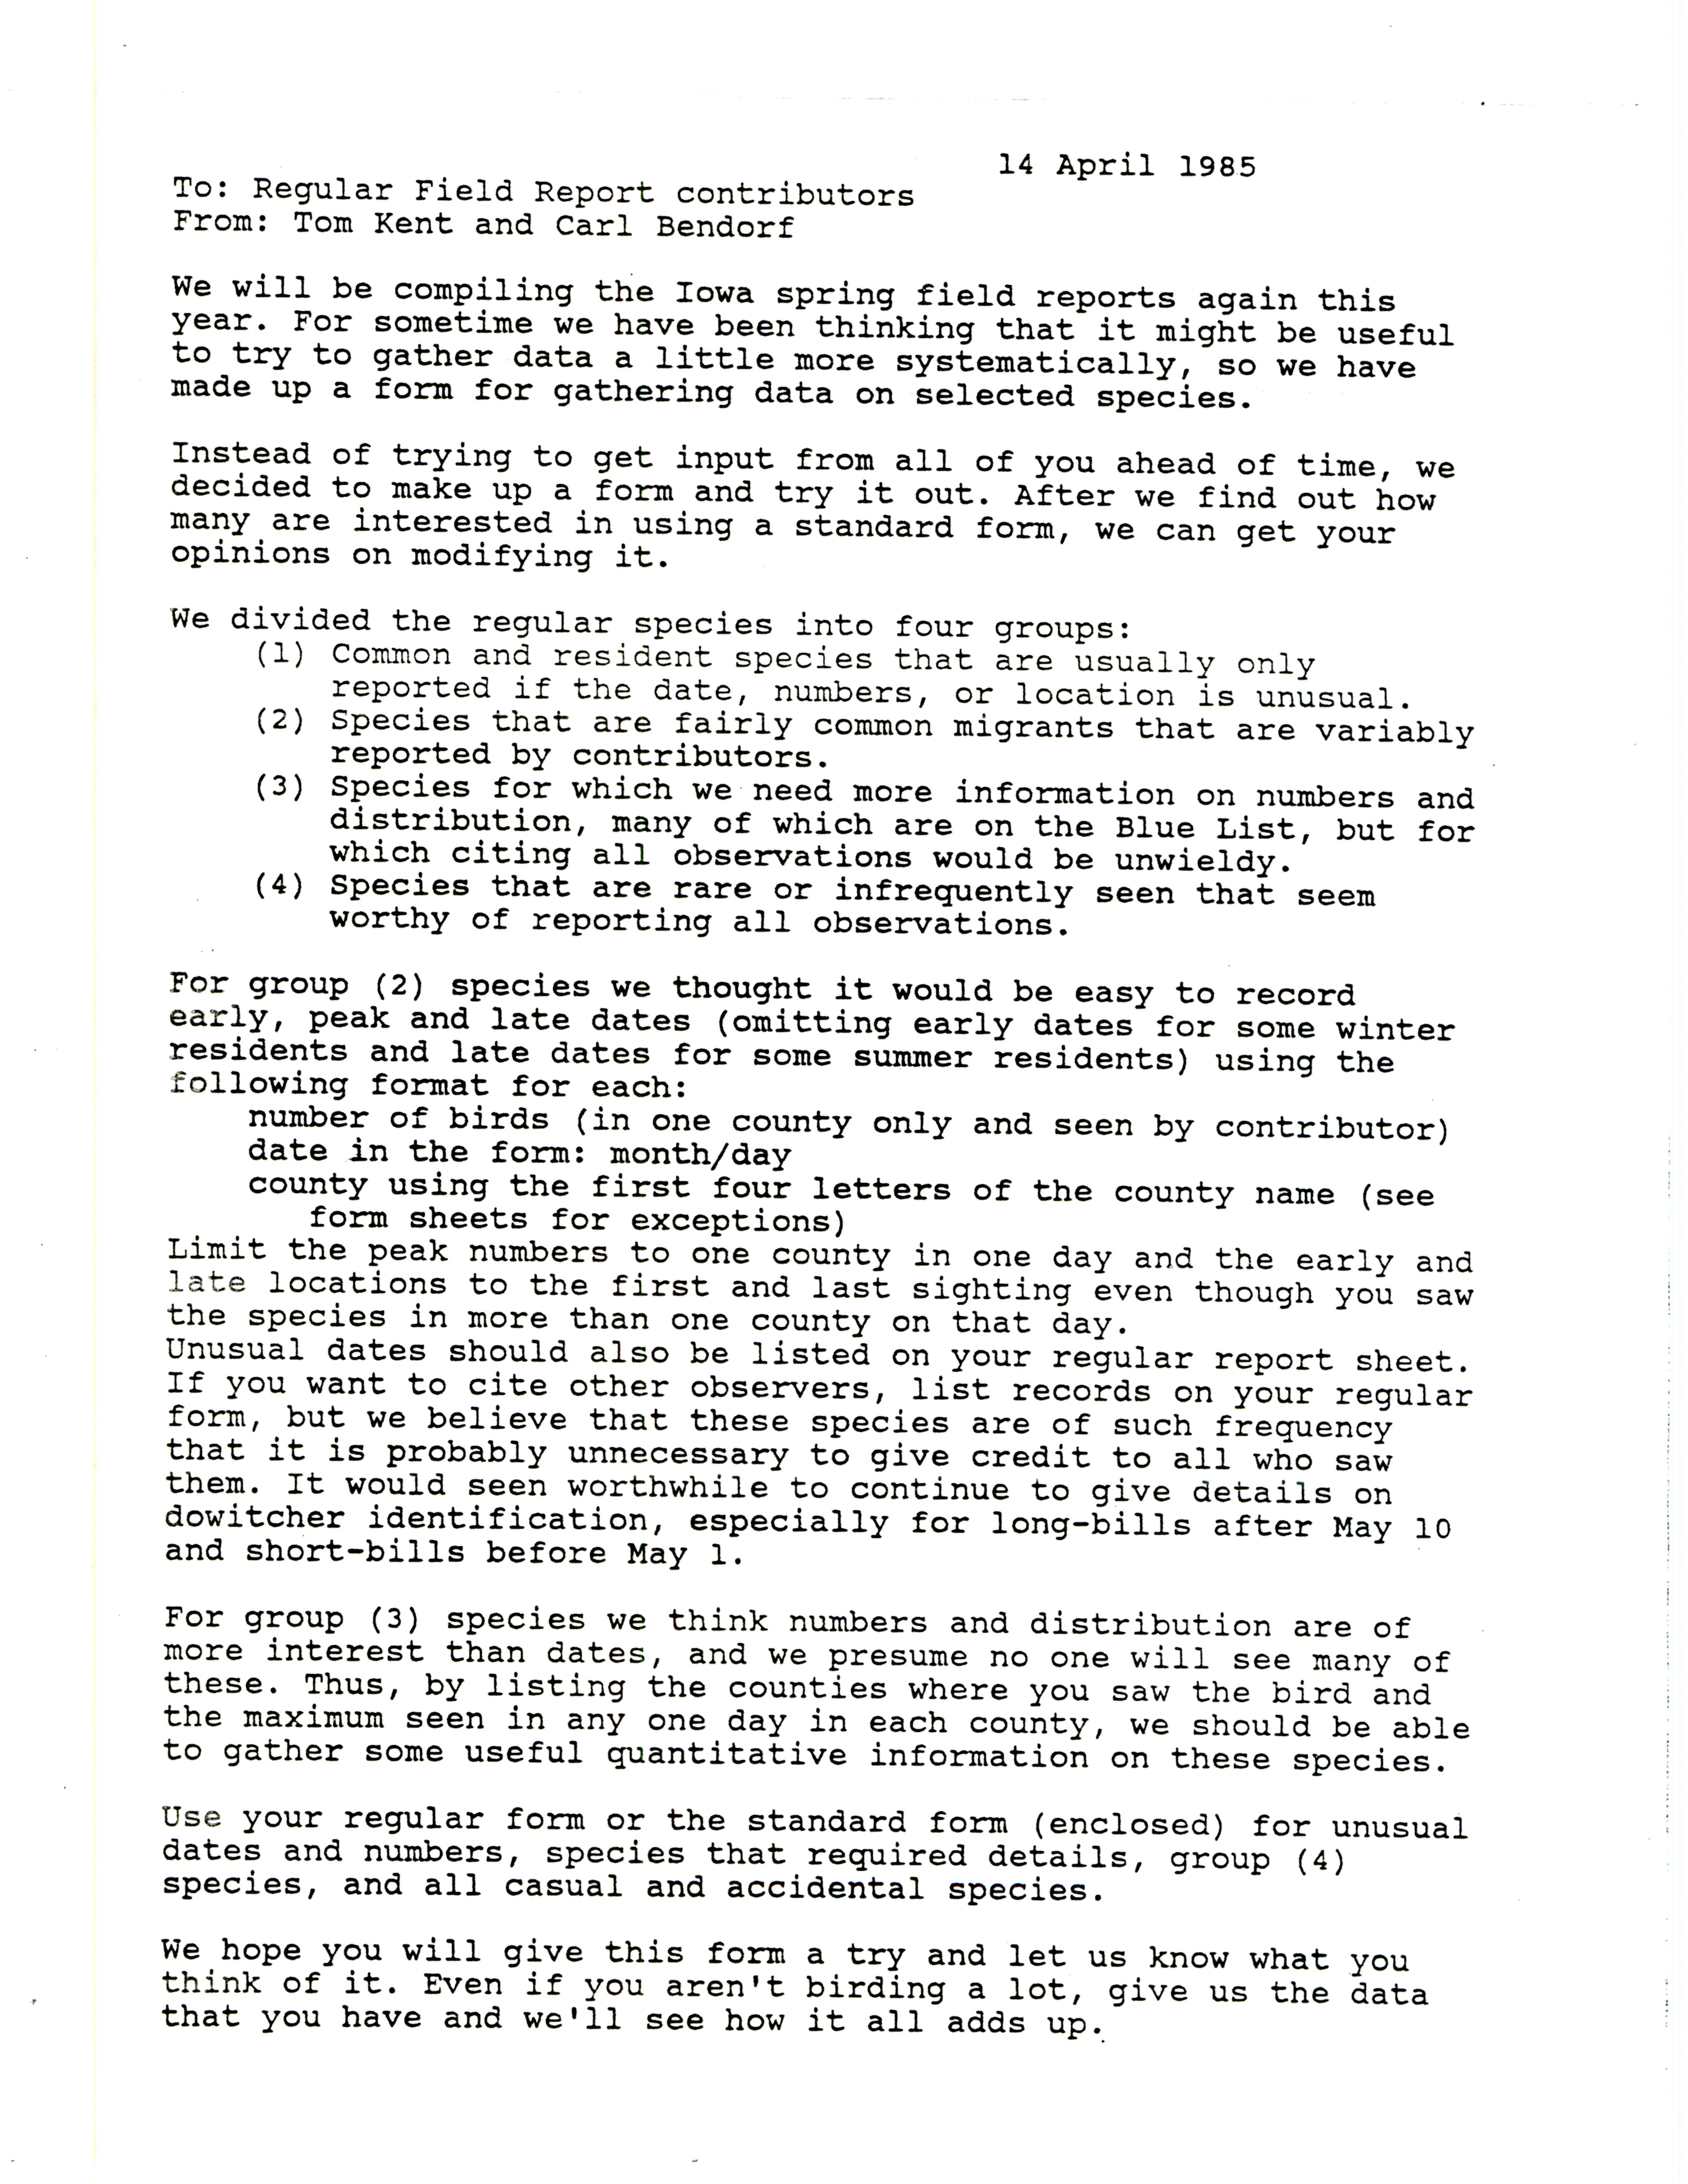 Thomas H. Kent and Carl J. Bendorf letter to regular field report contributors regarding a field report format, April 14, 1985